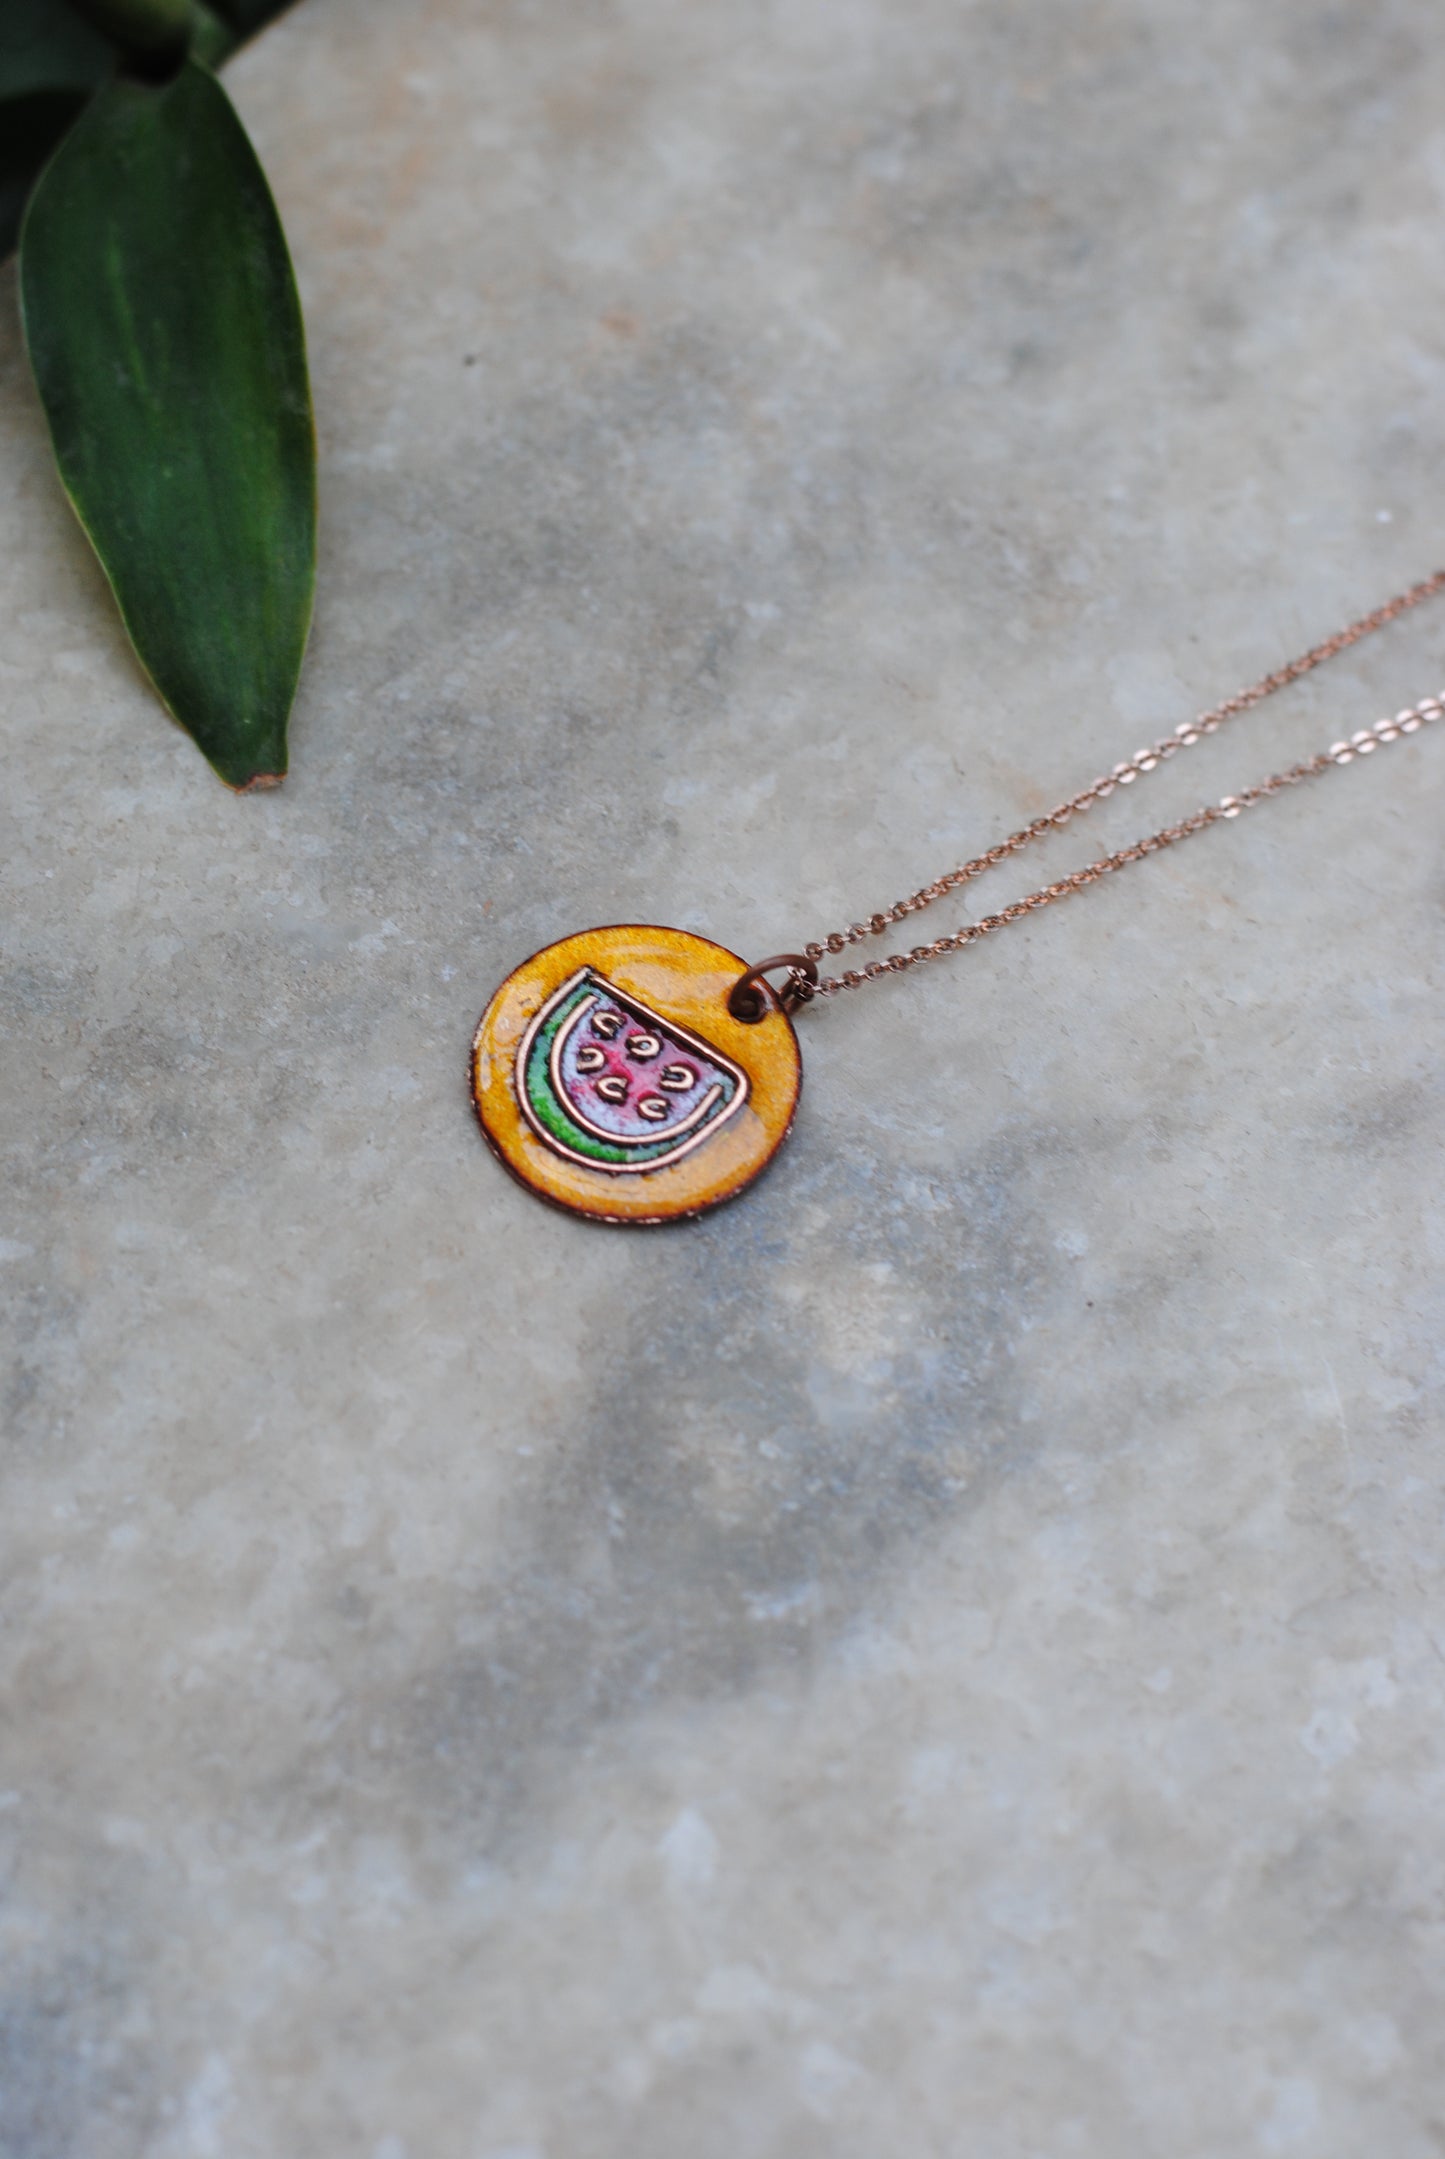 Copper enamel jewelry, funky pendant handcrafted in Maharashtra, India. Watermelon tarbooz theme